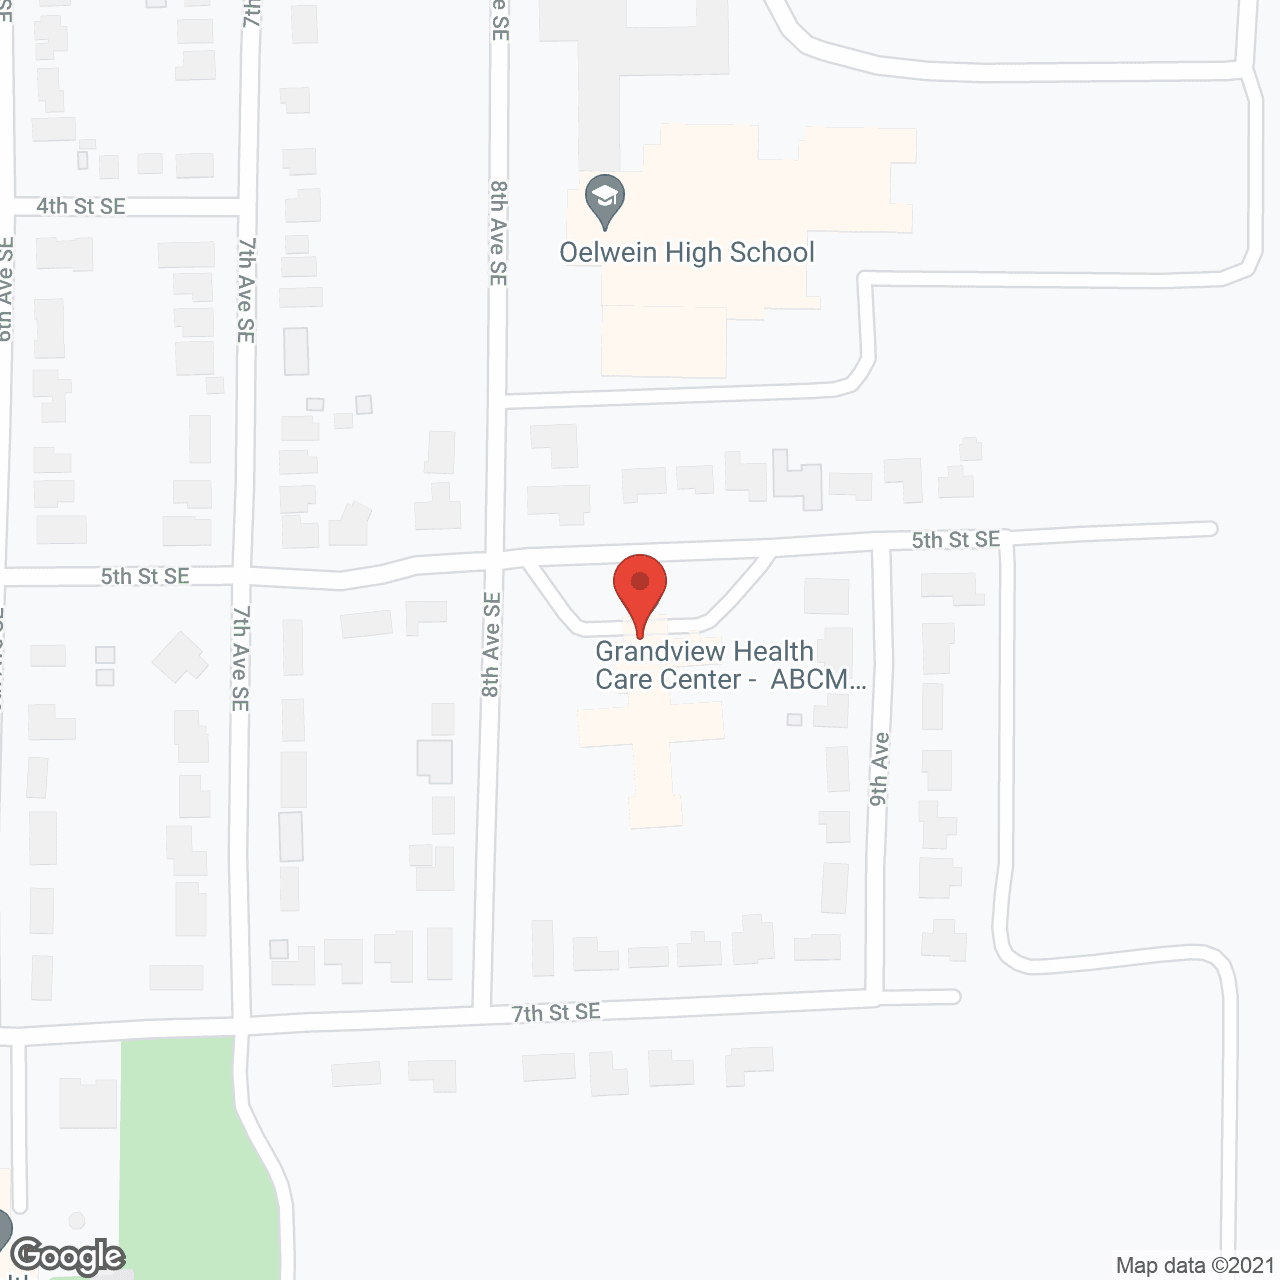 Grandview Health Care Center in google map